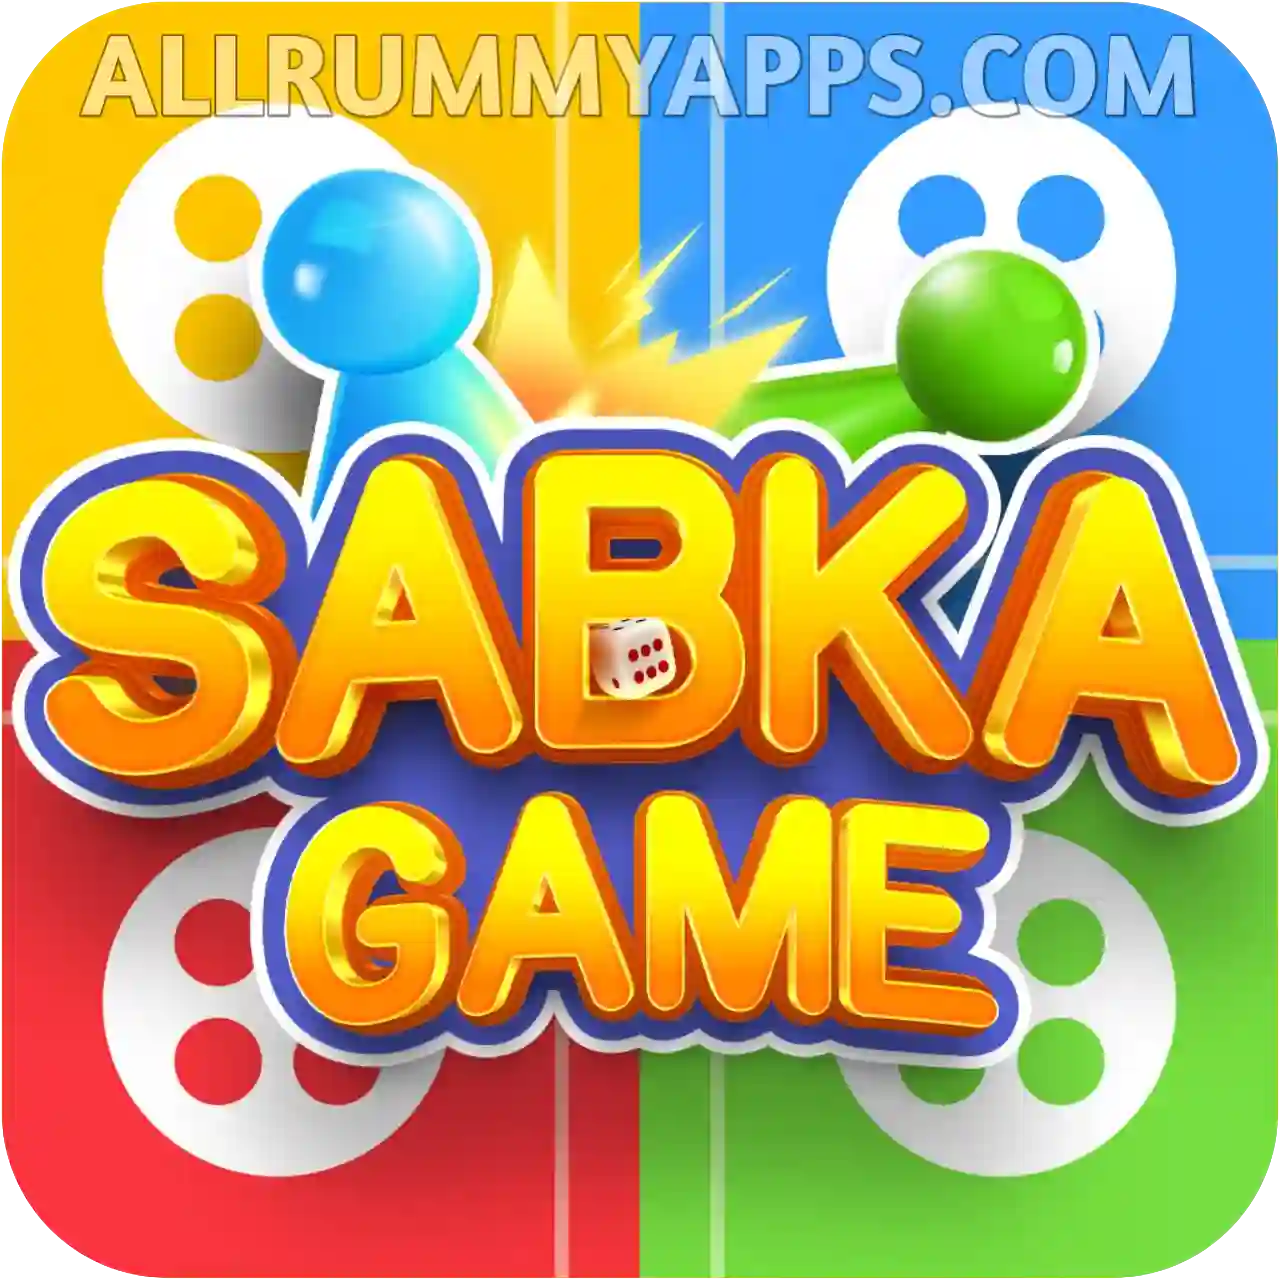 Sabka Game - All Rummy App